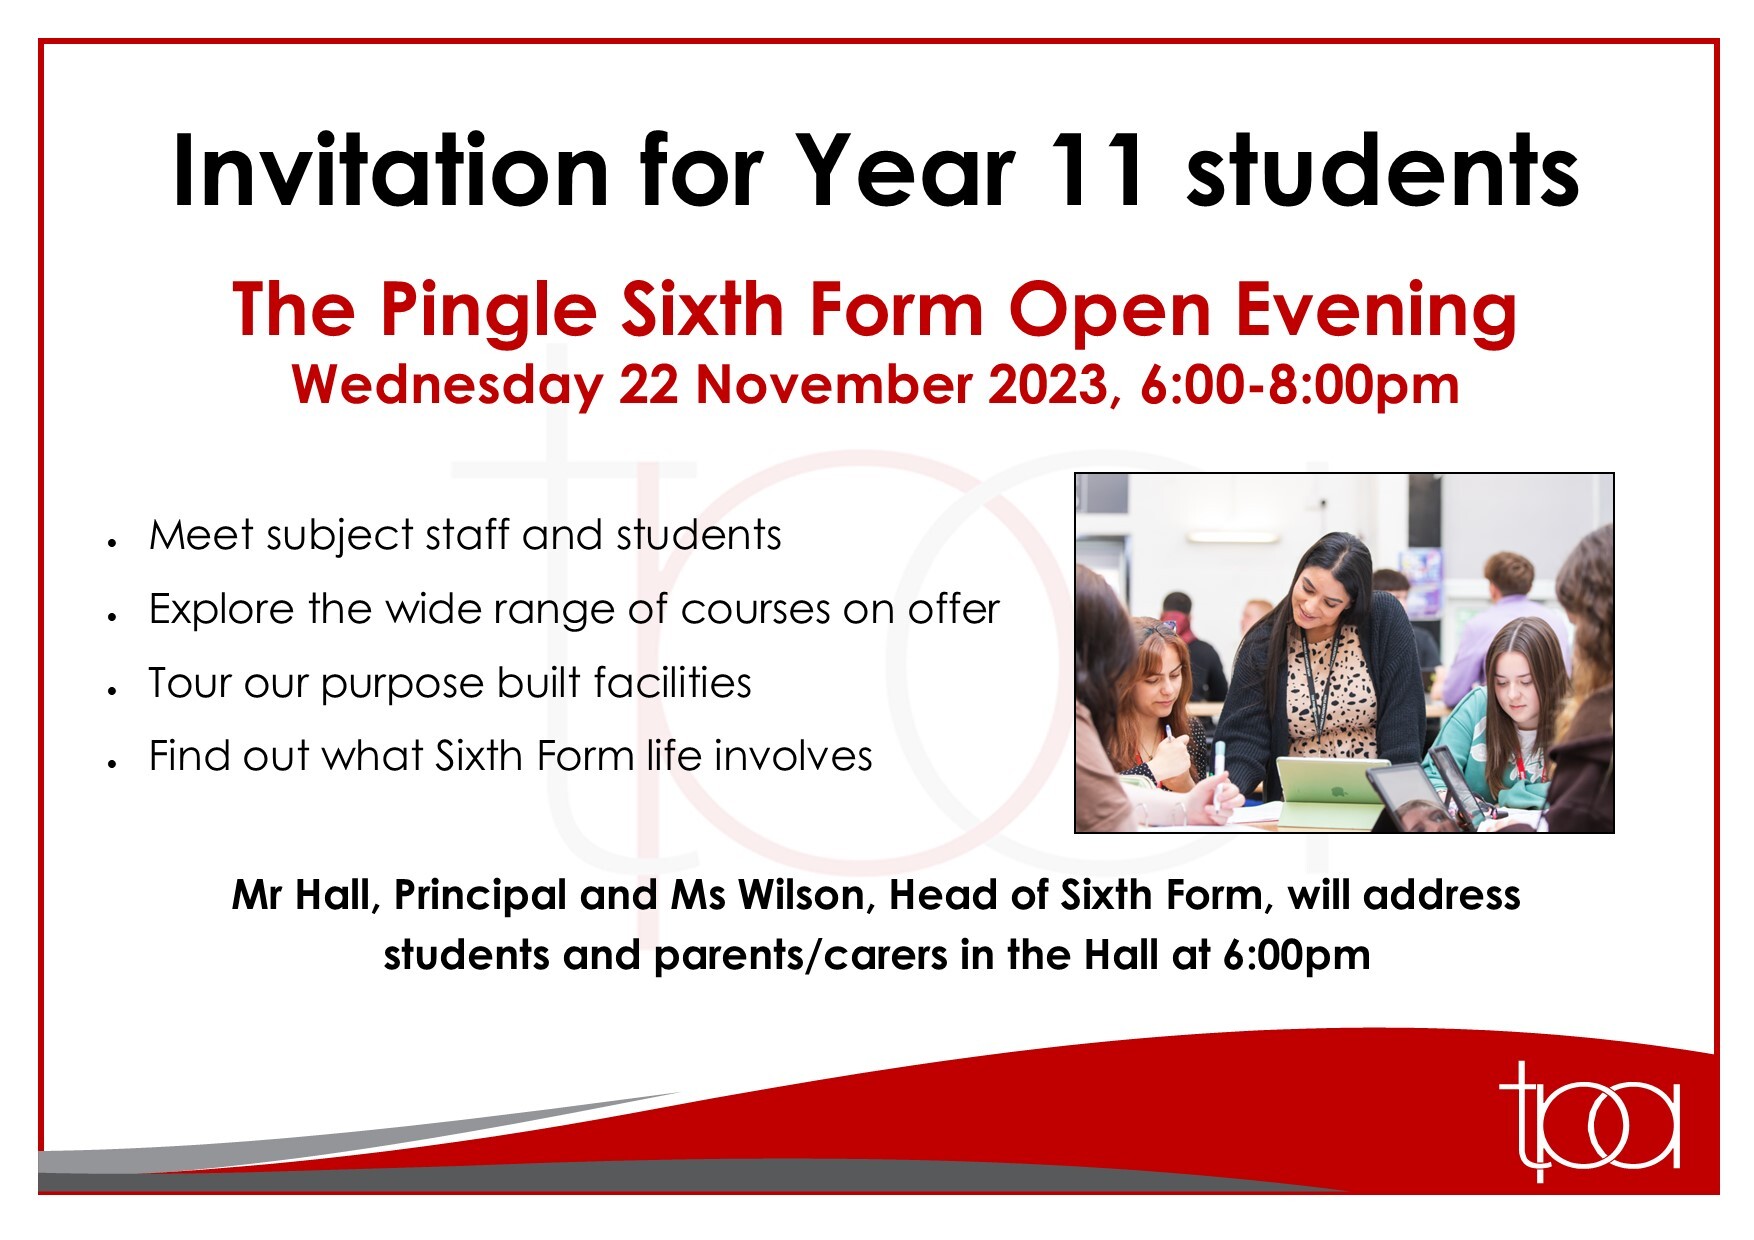 Pingle sixth form open evening invitation 2022